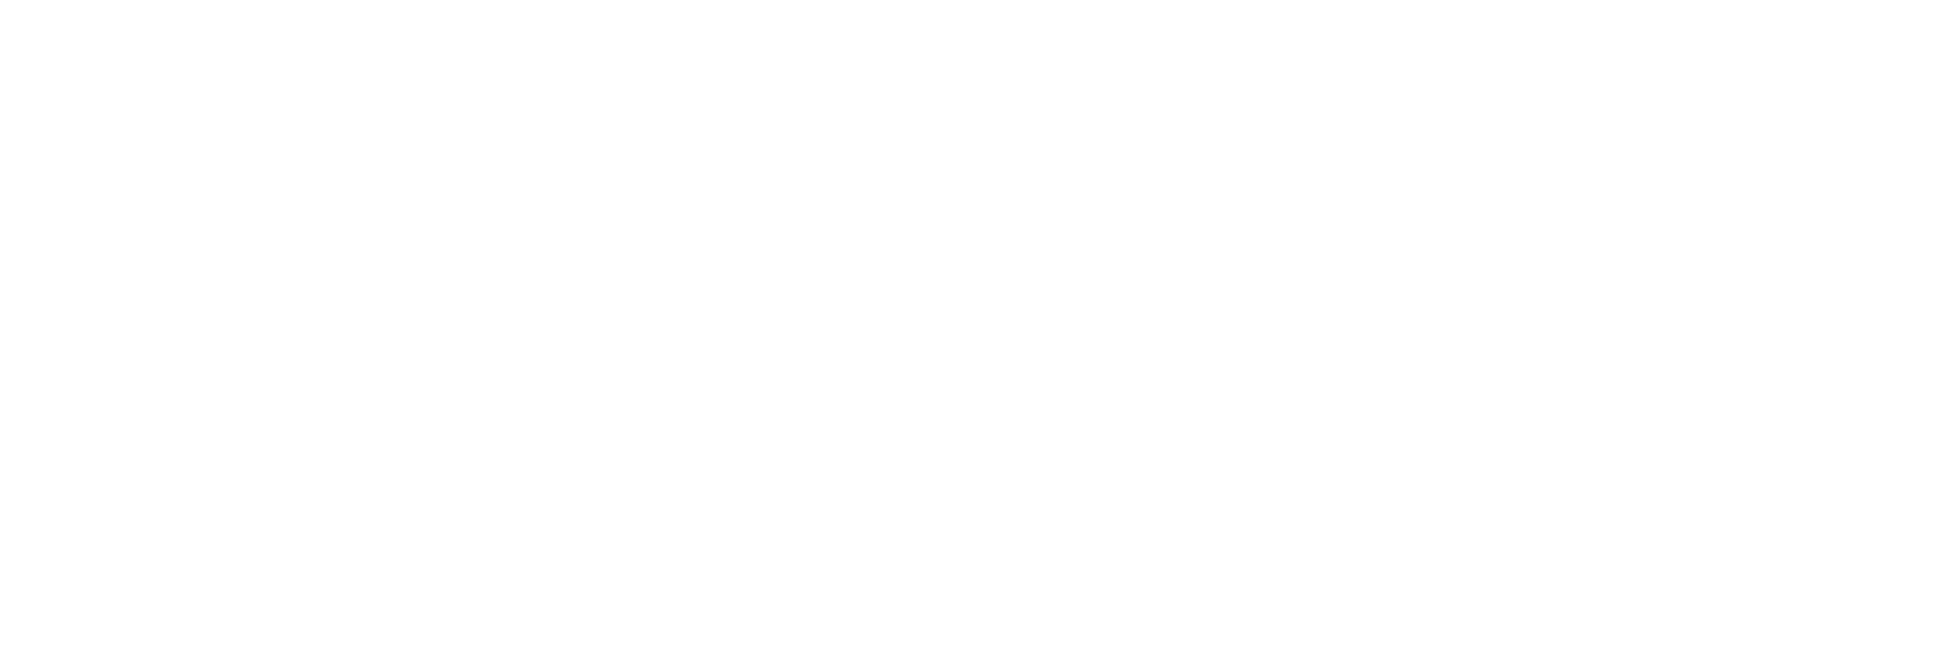 AniCura Råholt Dyreklinikk logo